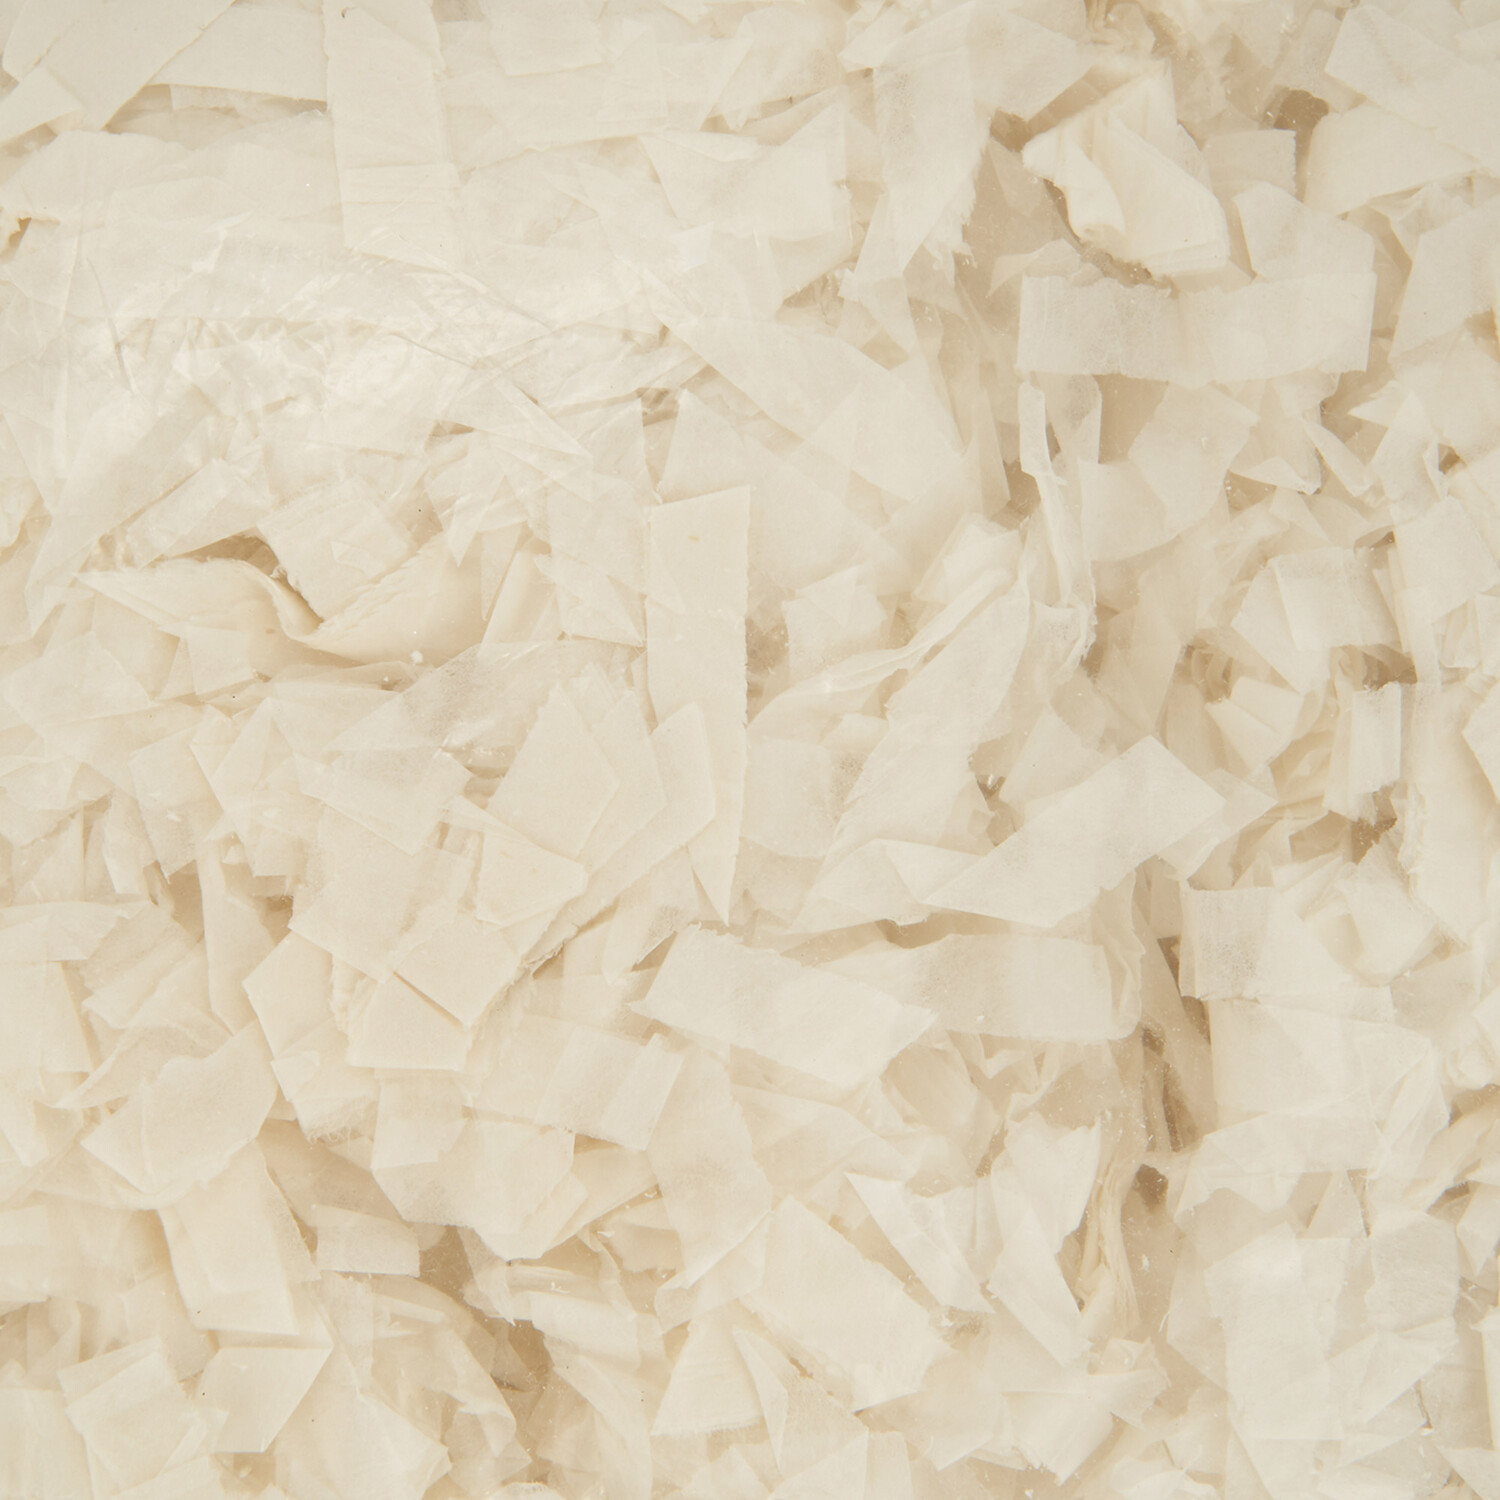 Giant Paper Bedding - White Image 2